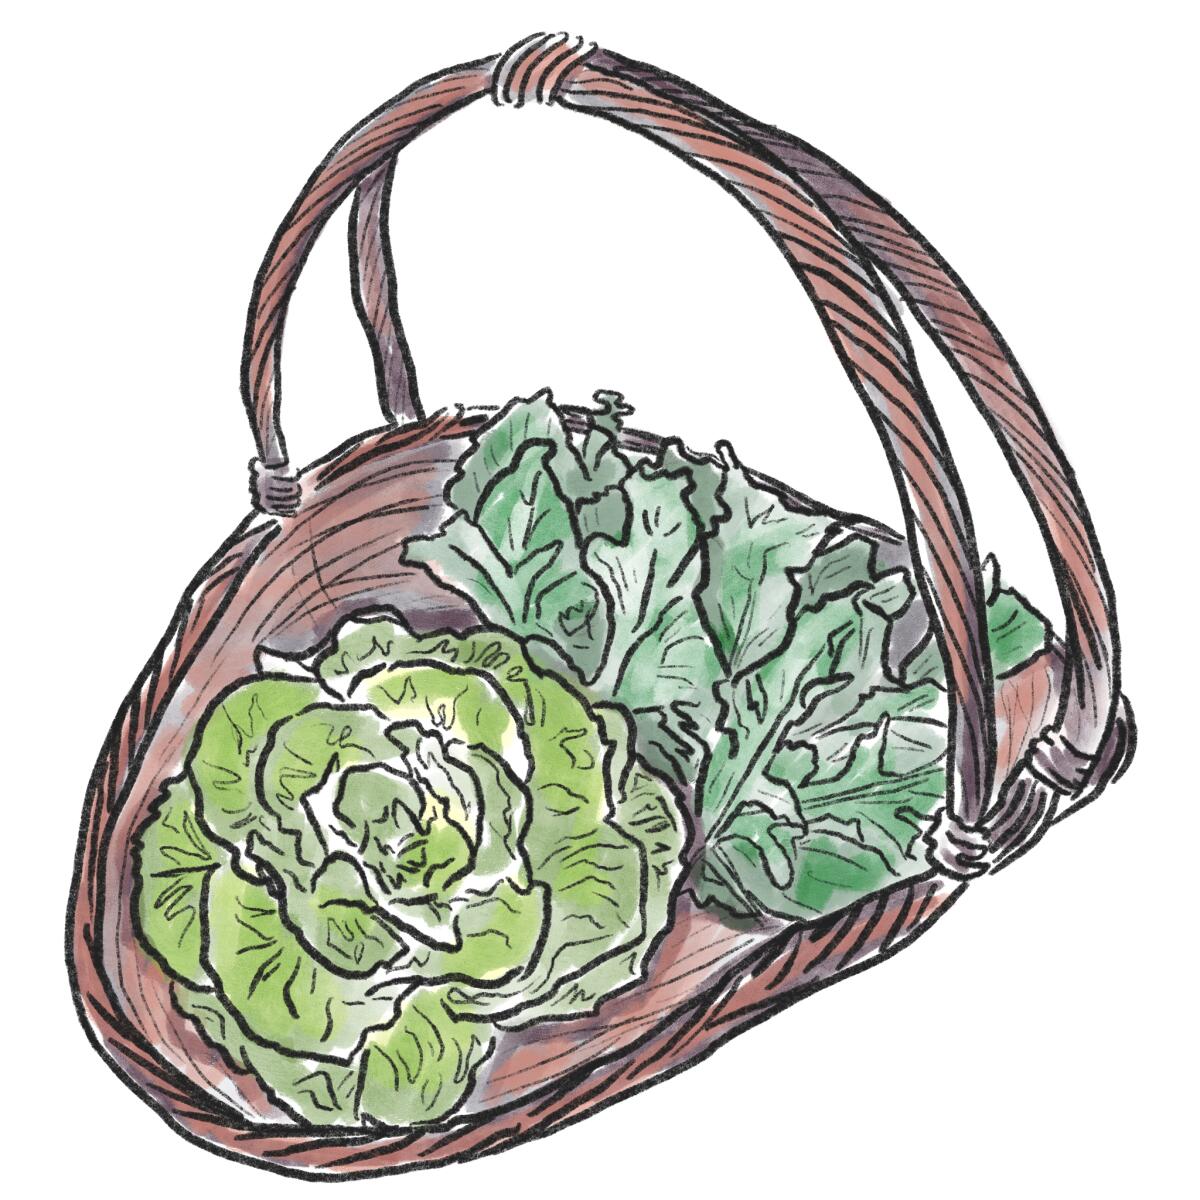 An illustration of lettuce and arugula in a basket 